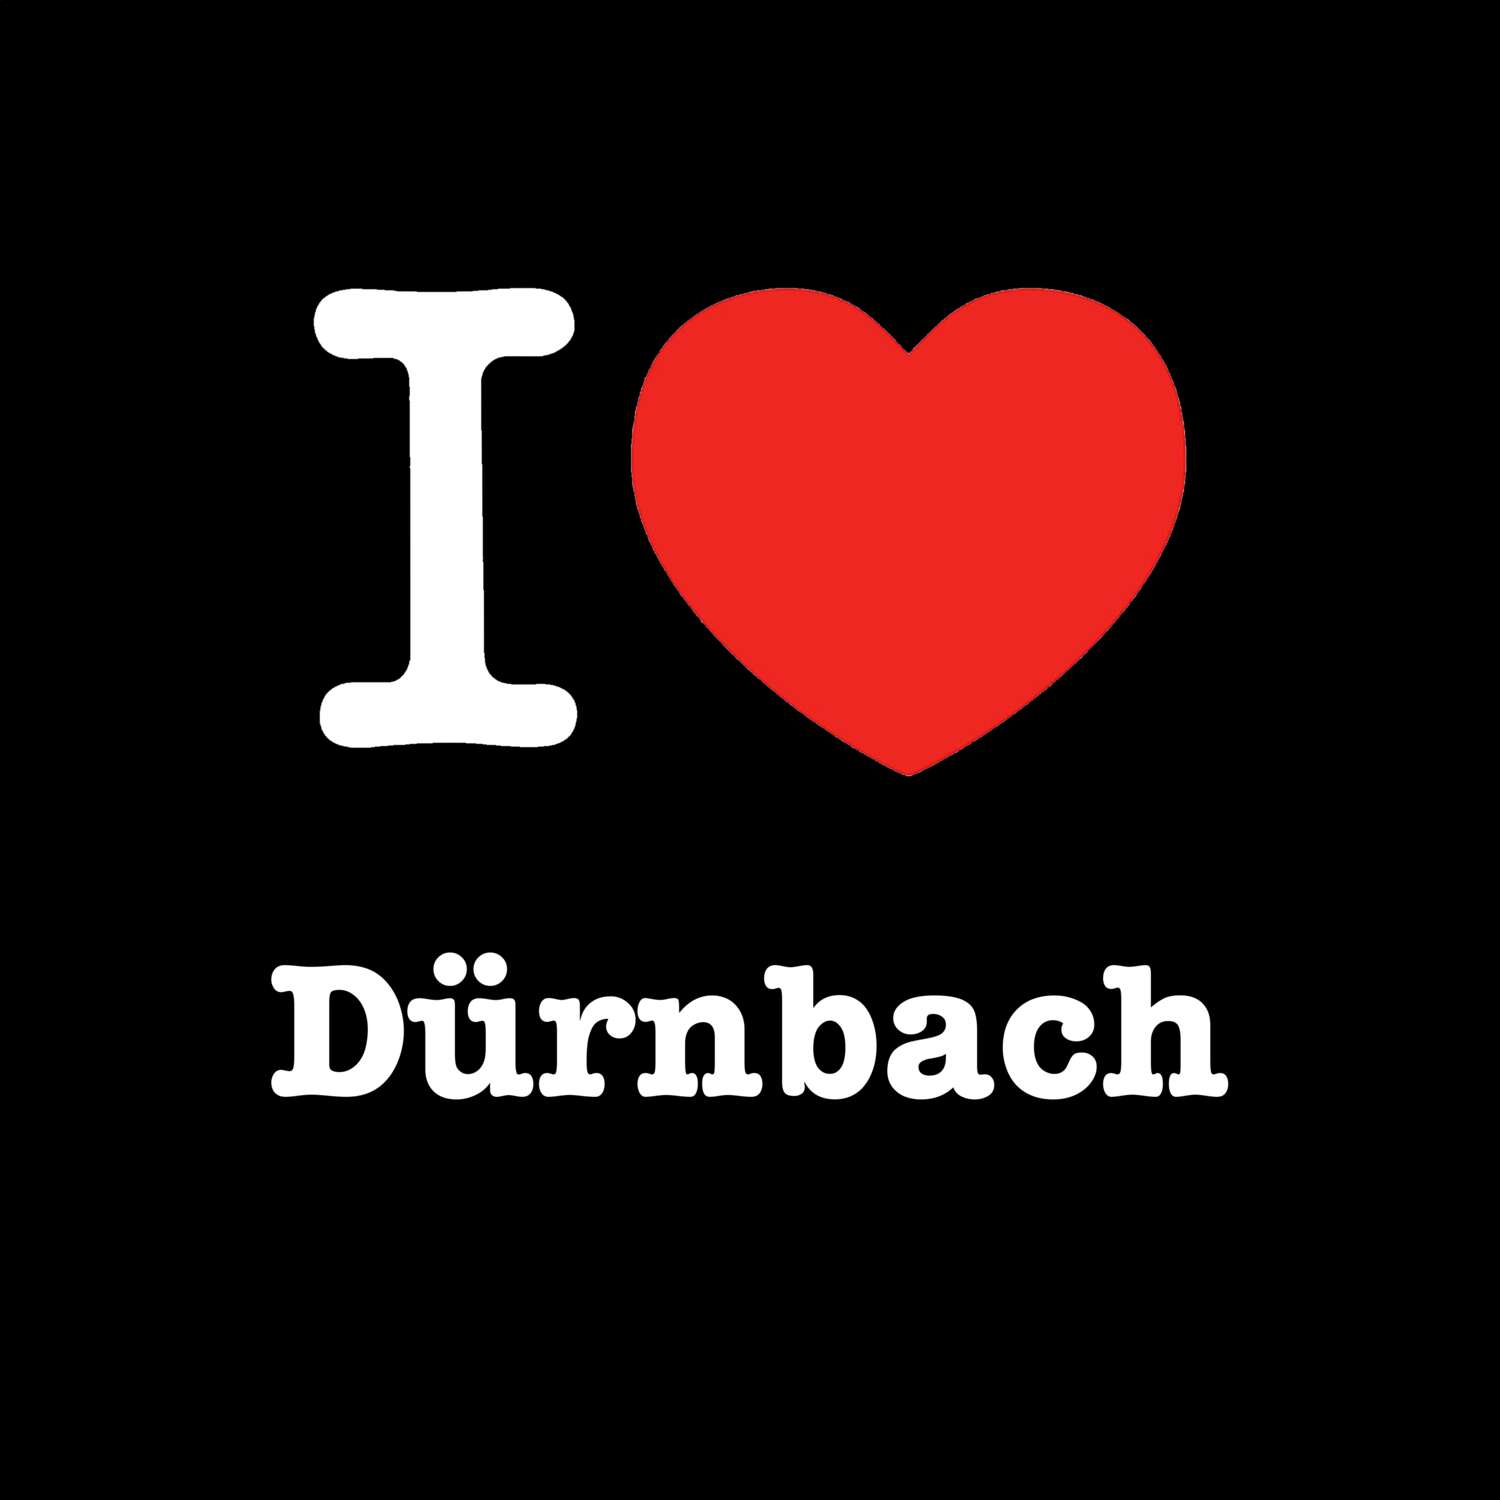 Dürnbach T-Shirt »I love«